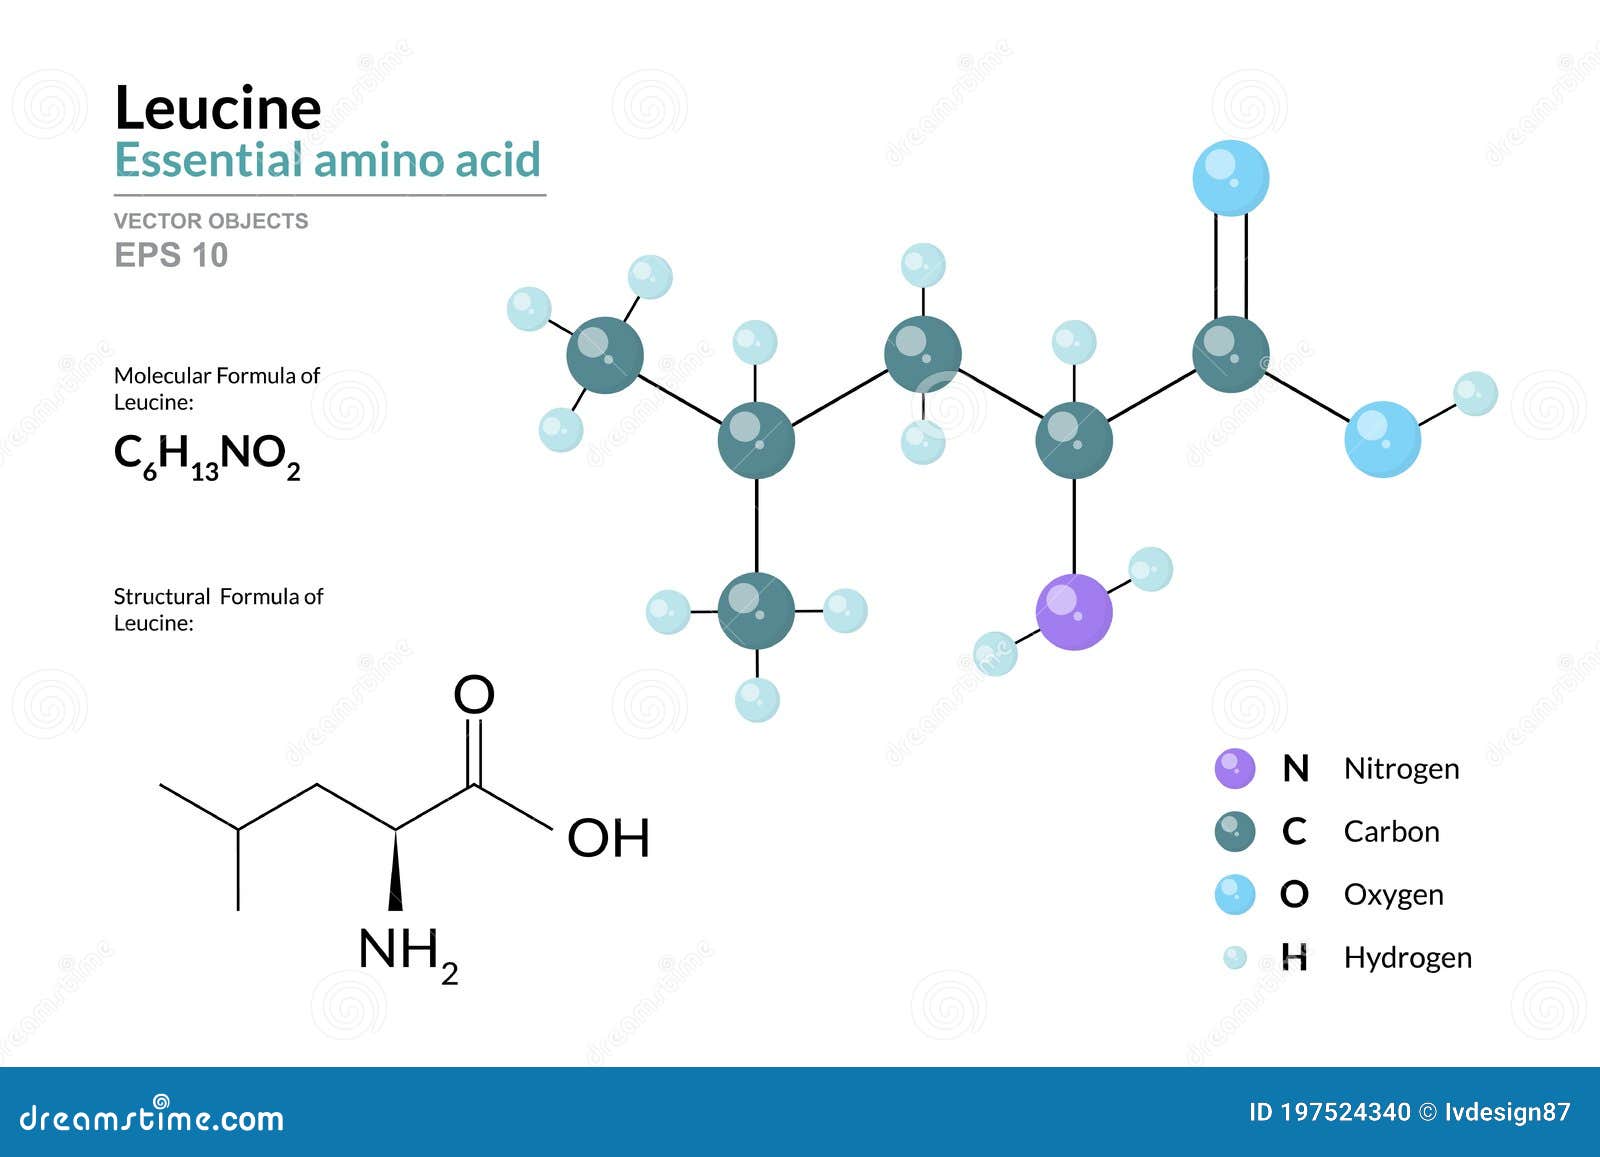 leucine. leu c6h13no2. essential amino acid. structural chemical formula and molecule 3d model. atoms with color coding. 